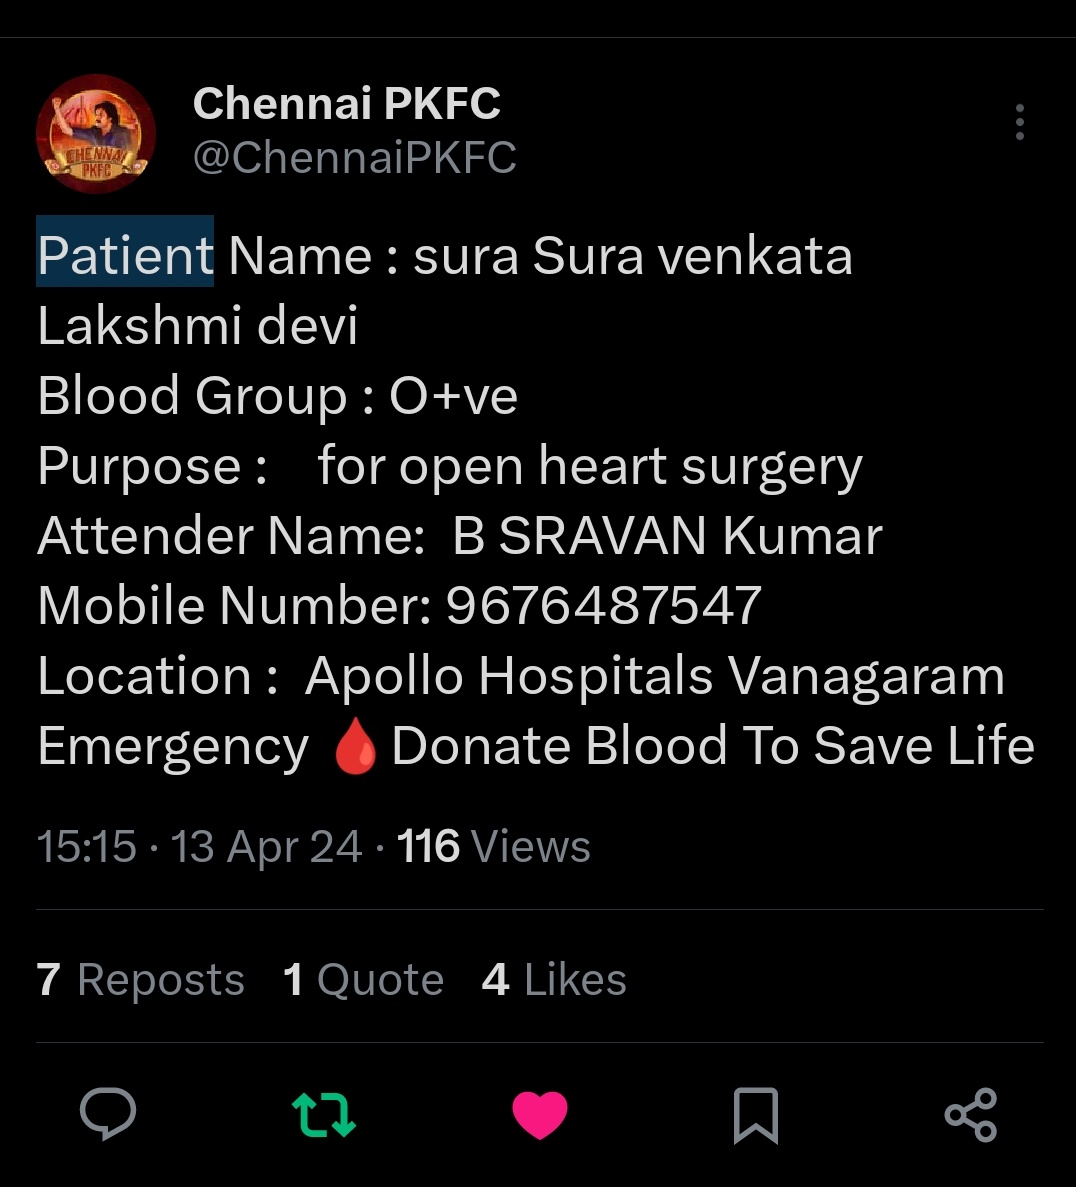 Need o+ve blood urgent please
Retweet #donateblood